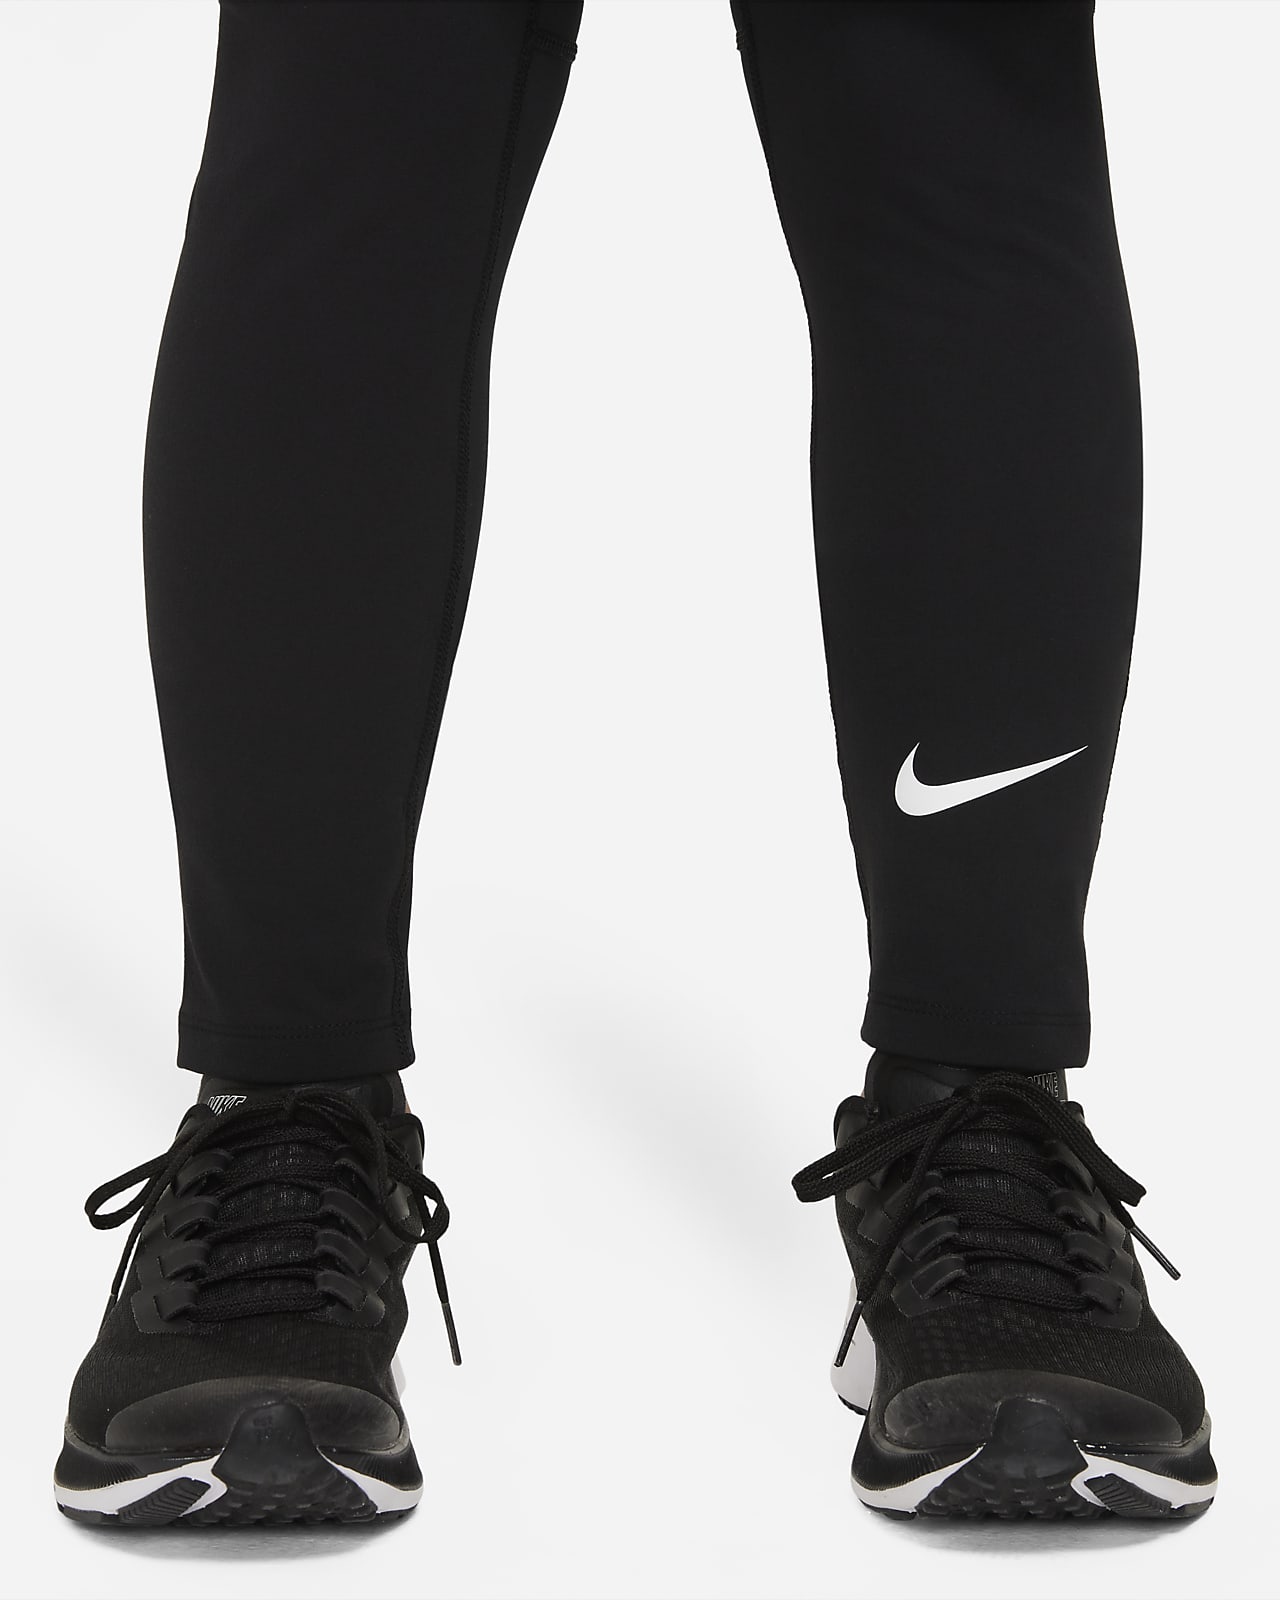 Nike Dri-Fit One Legging 8-16y - Clement